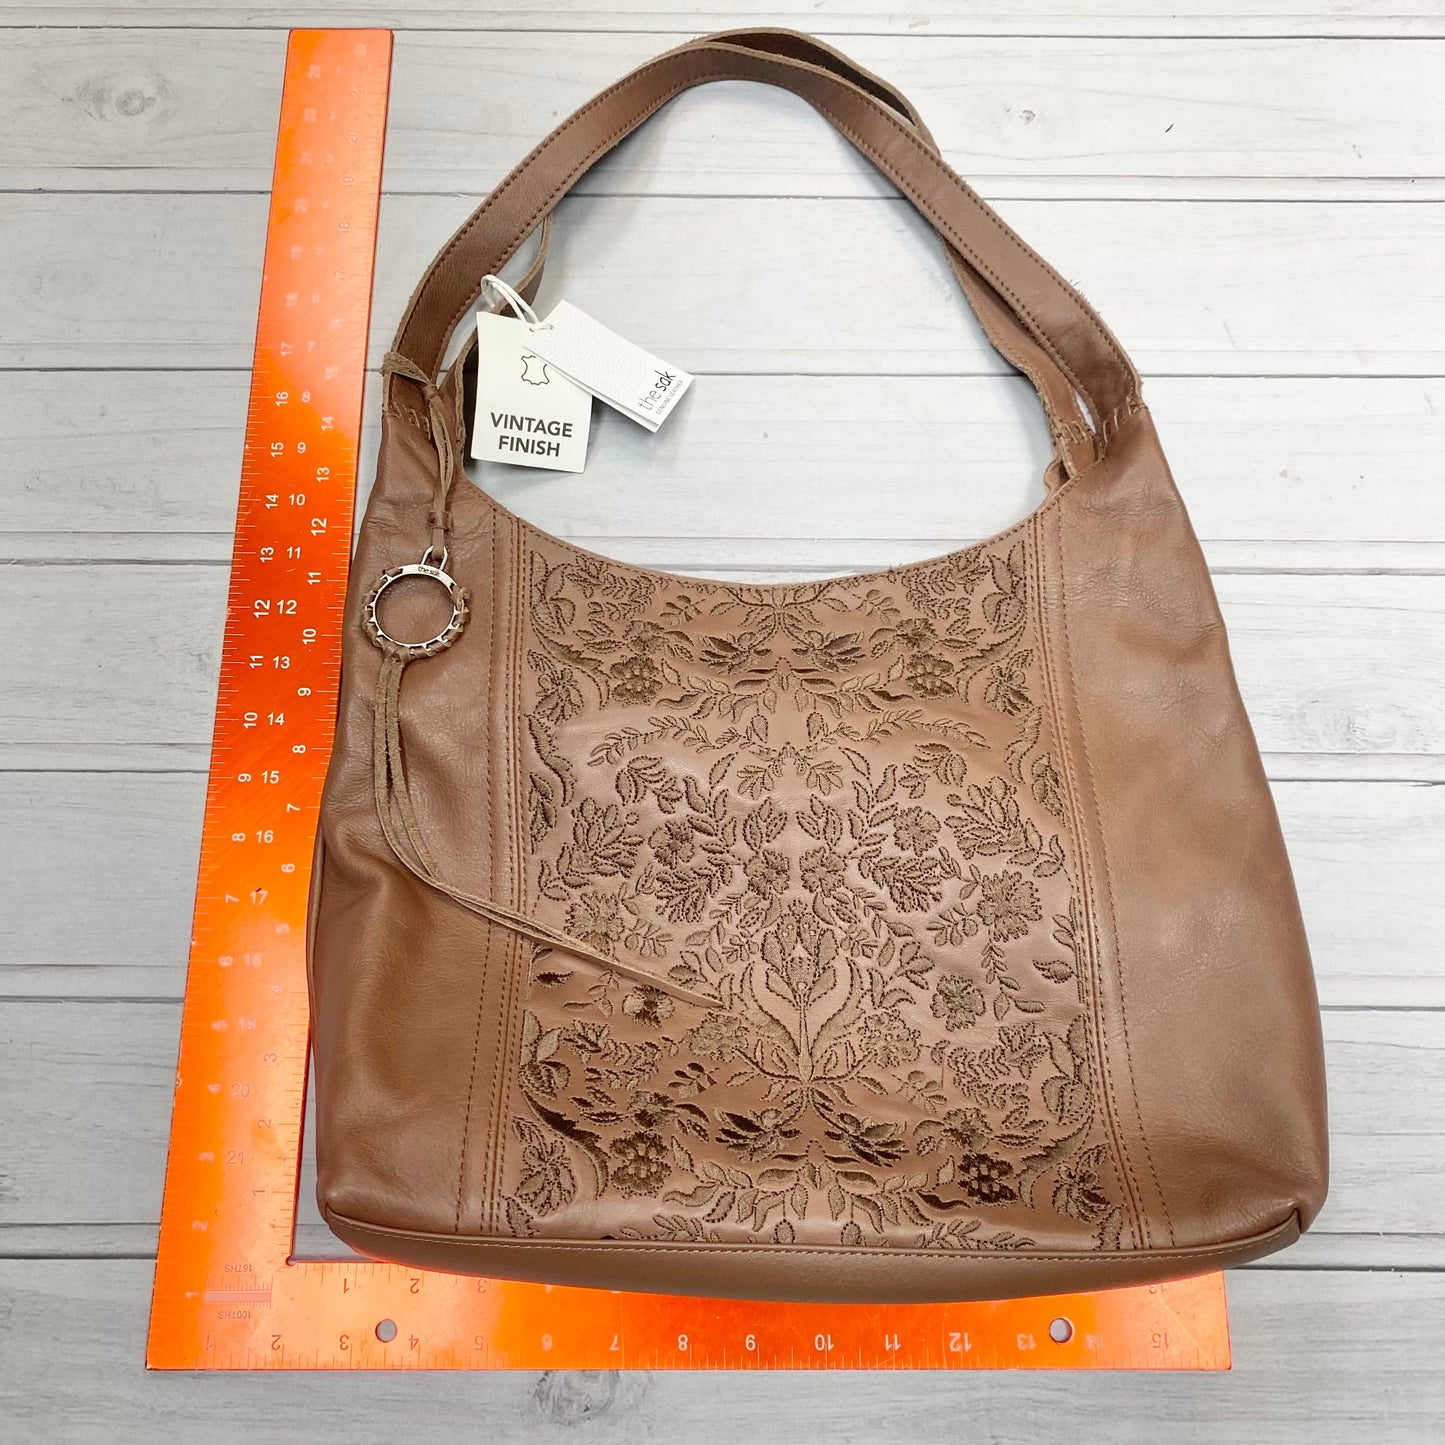 Handbag Leather By The Sak  Size: Medium